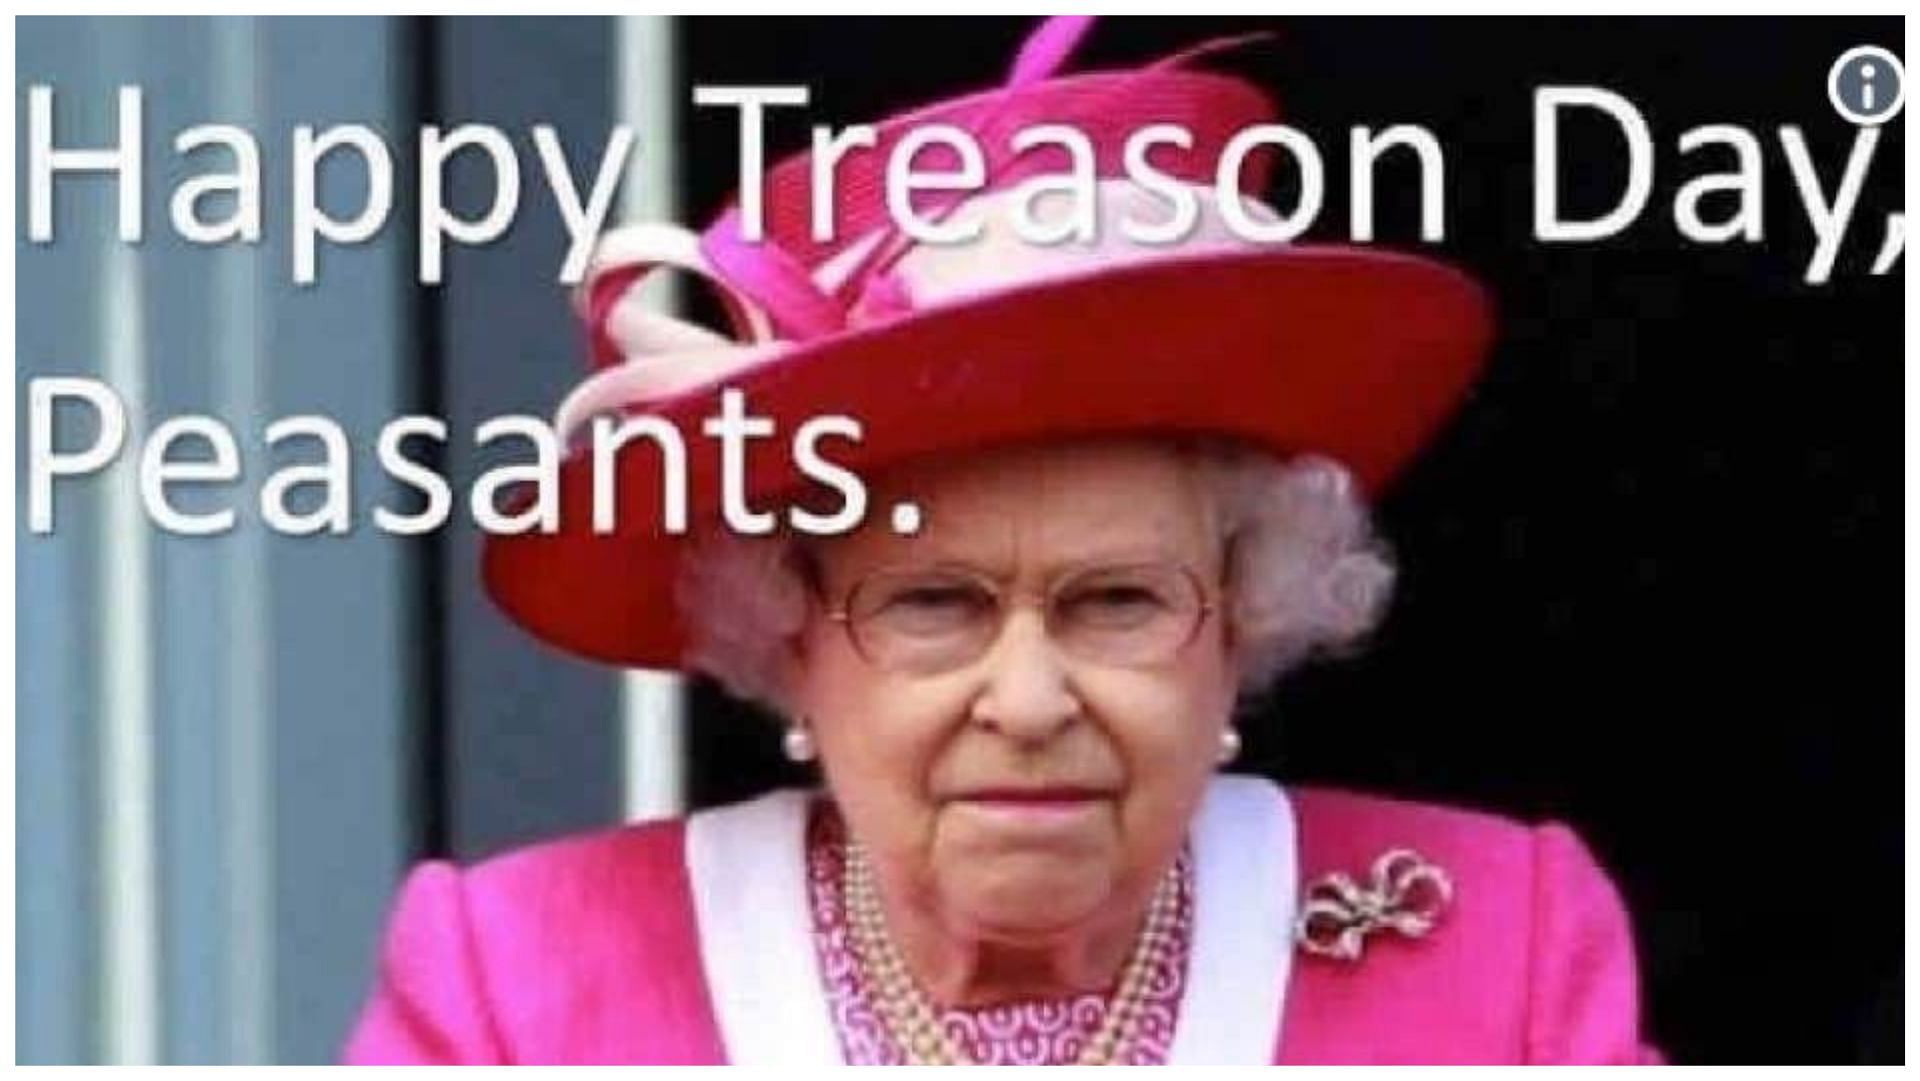 Happy Treason Day memes are trending on Twitter (image via Pinterest/Juliana Jenkins-Gaciarek)